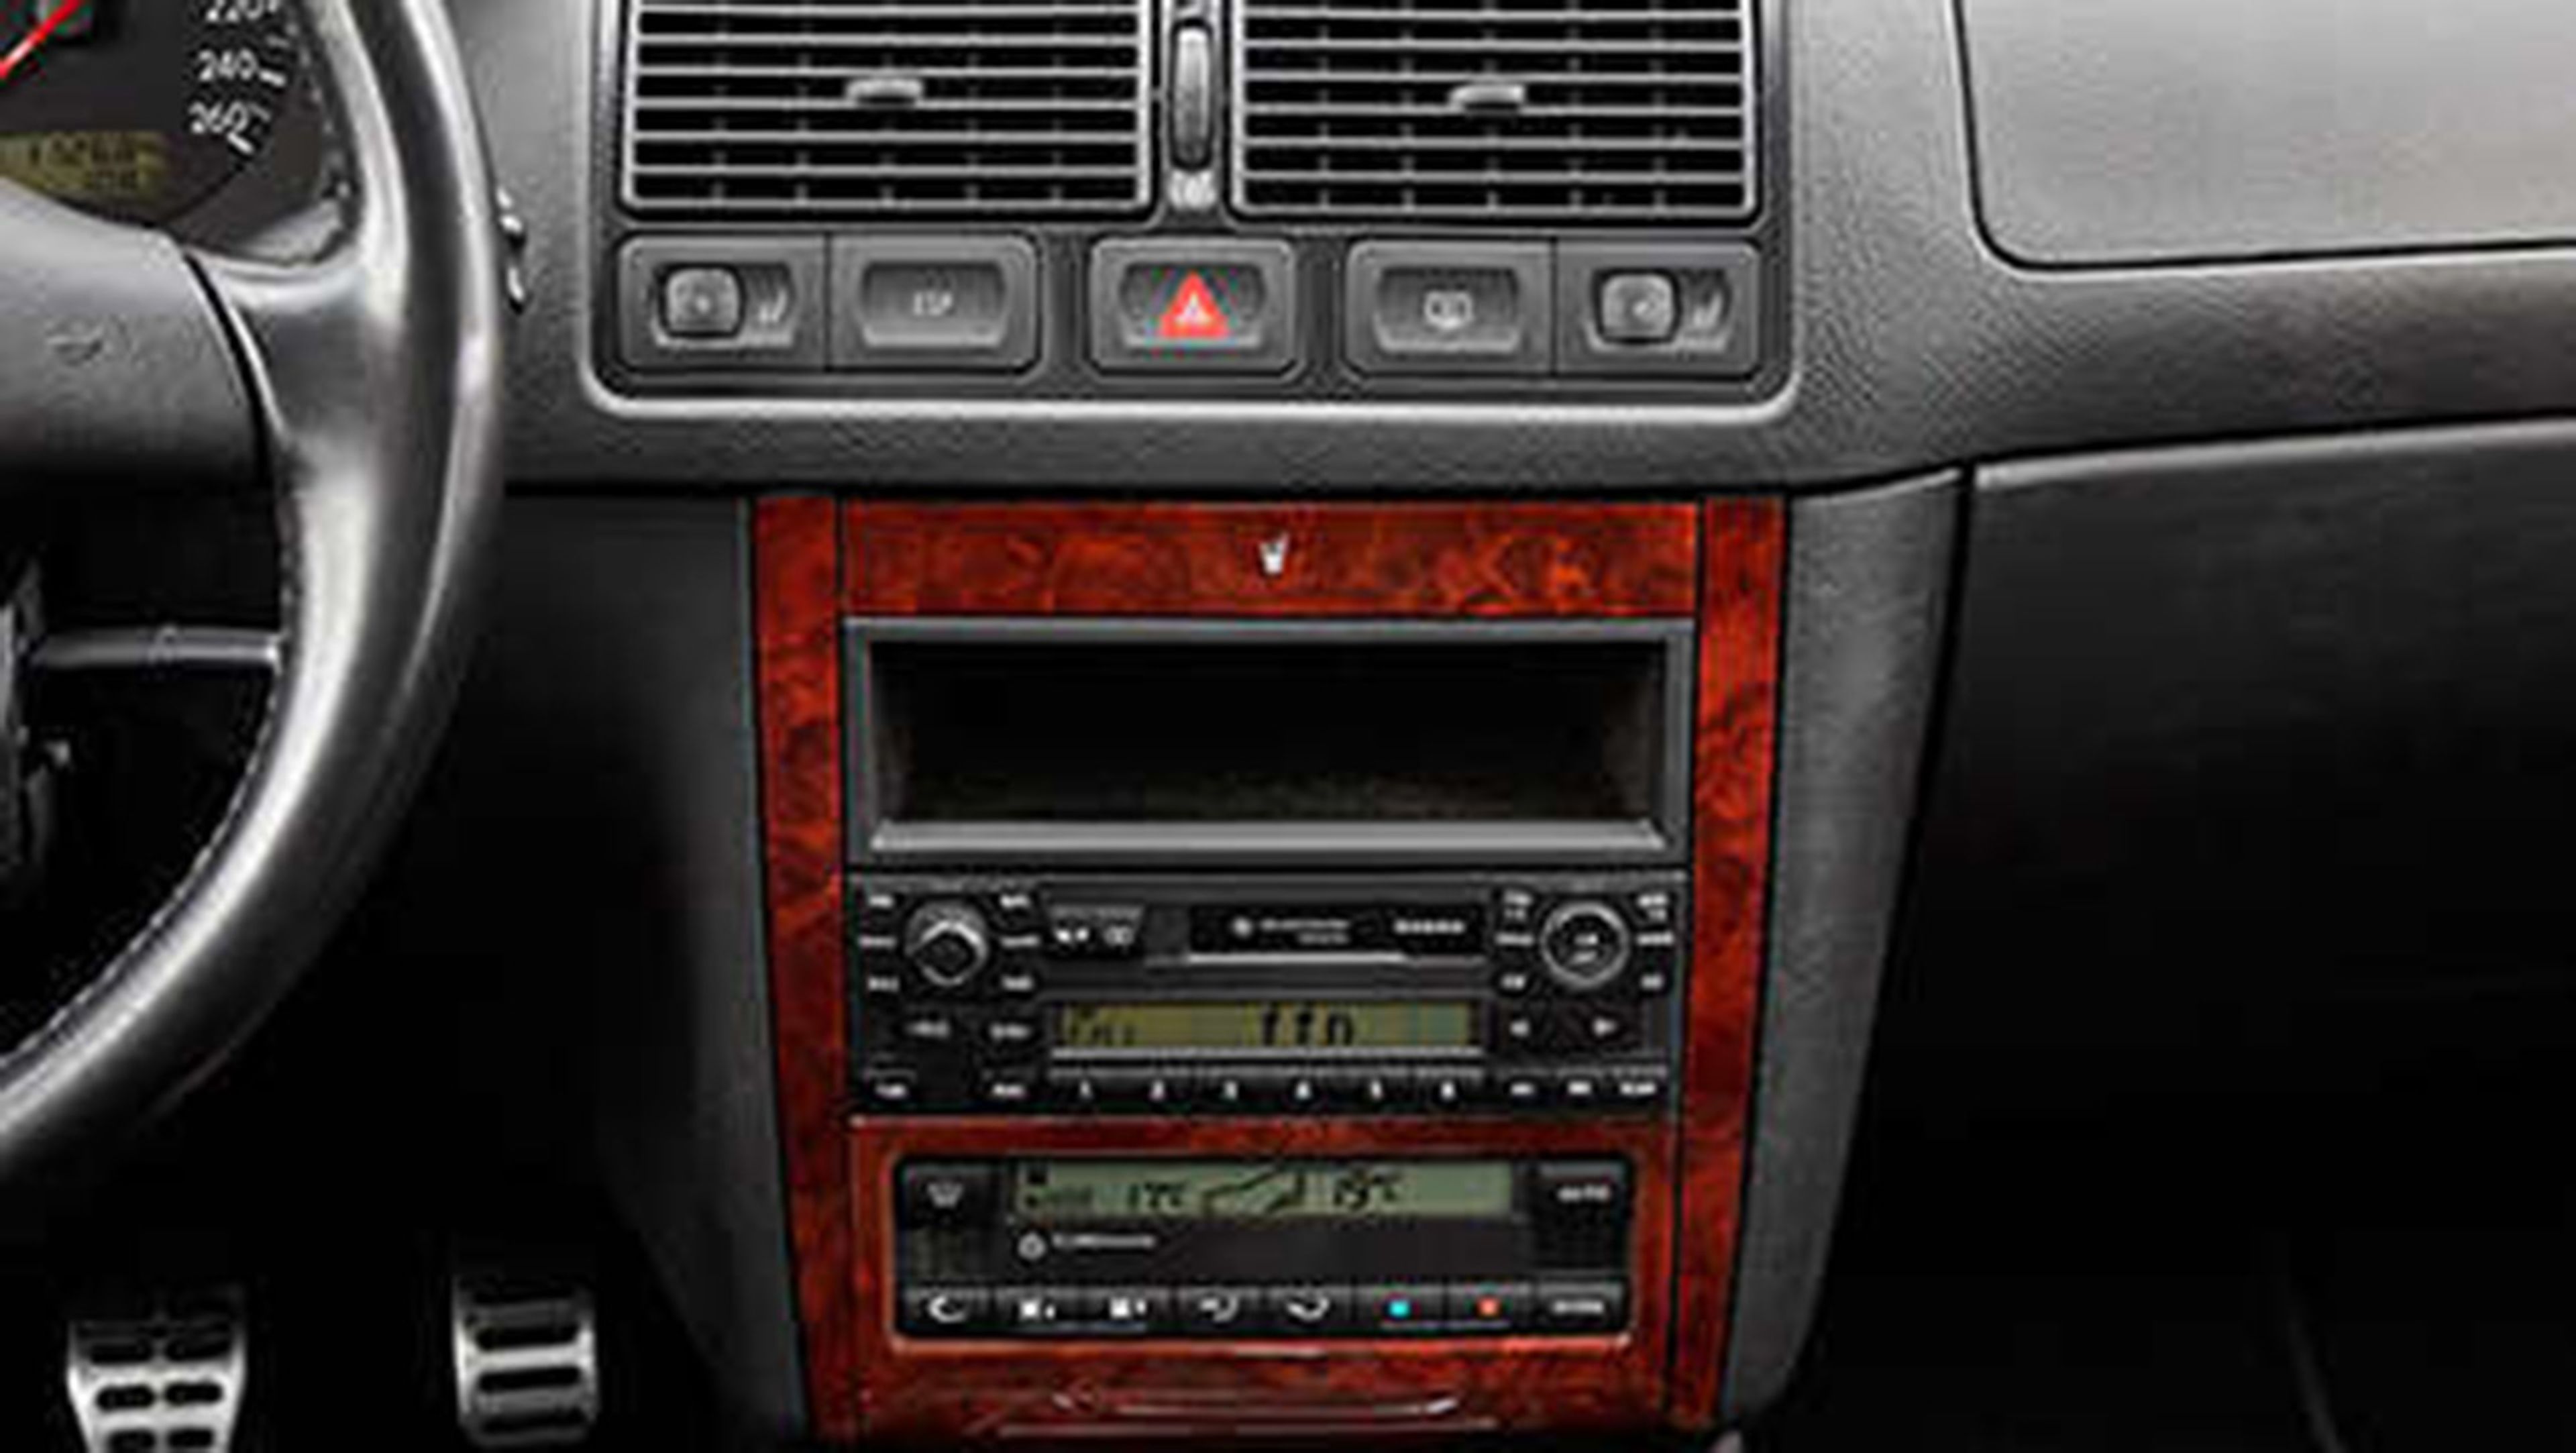 Golf Mk4 radio